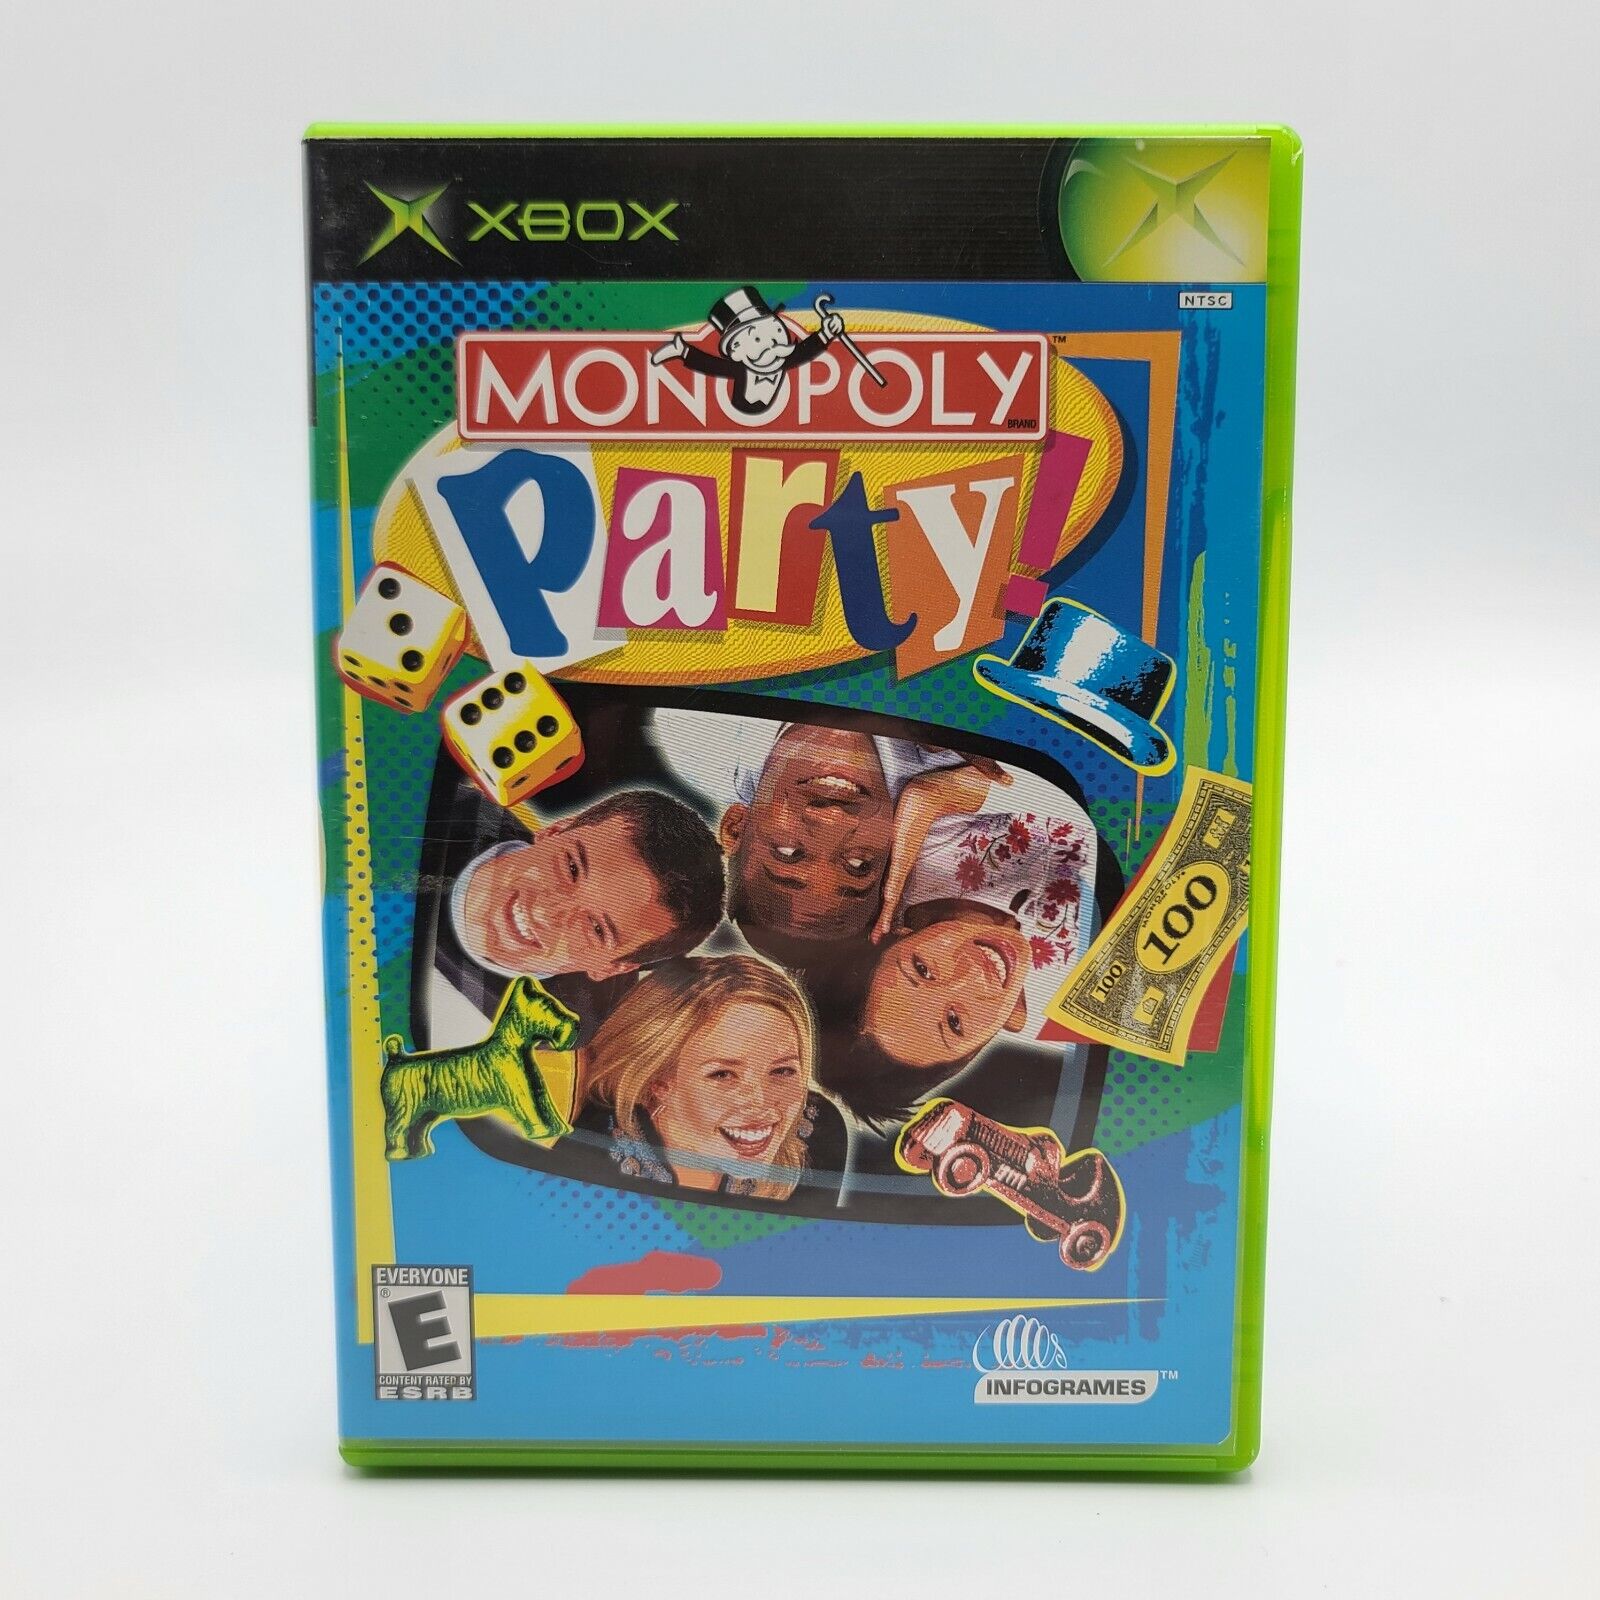 Monopoly Party (Microsoft Xbox, 2002) Complete CIB - Great Condition FREE SHIP